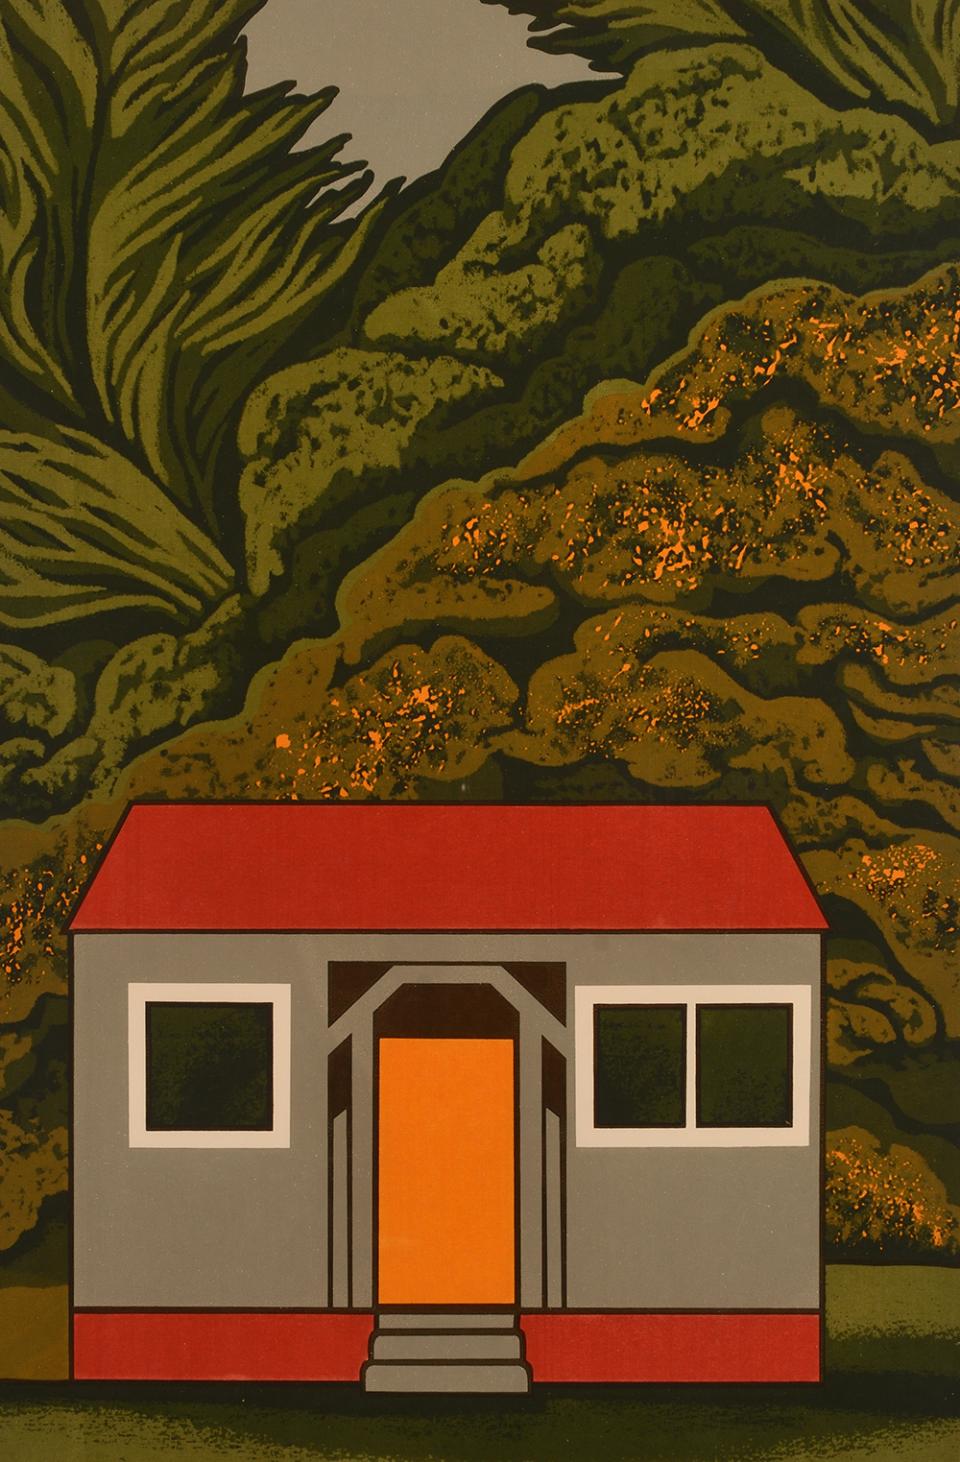 Robin White, Sam’s place, Bottle Creek (1971), screenprint, Collection of Aratoi Wairarapa Museum of Art and History.